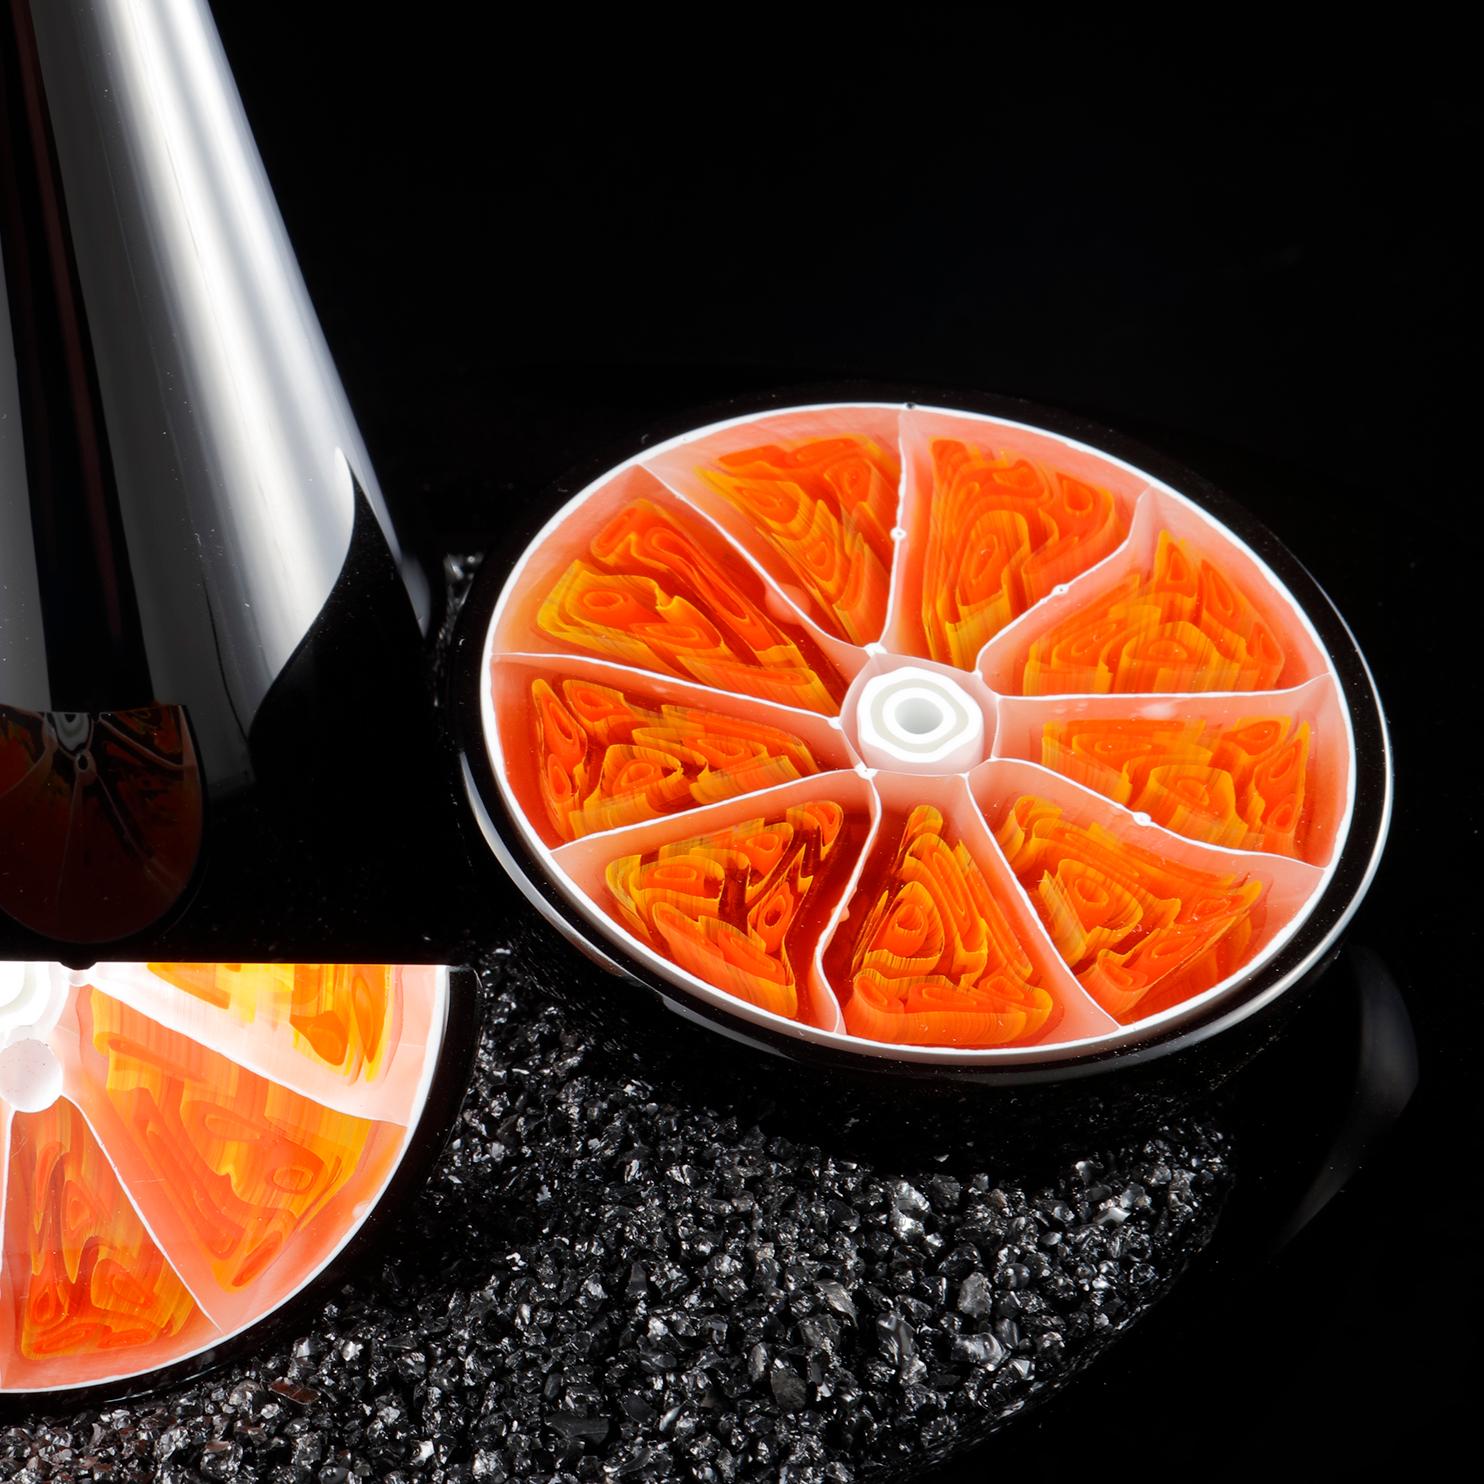 Hand-Crafted Carbon Orange, a Unique Glass Still Life Installation Art Work by Elliot Walker